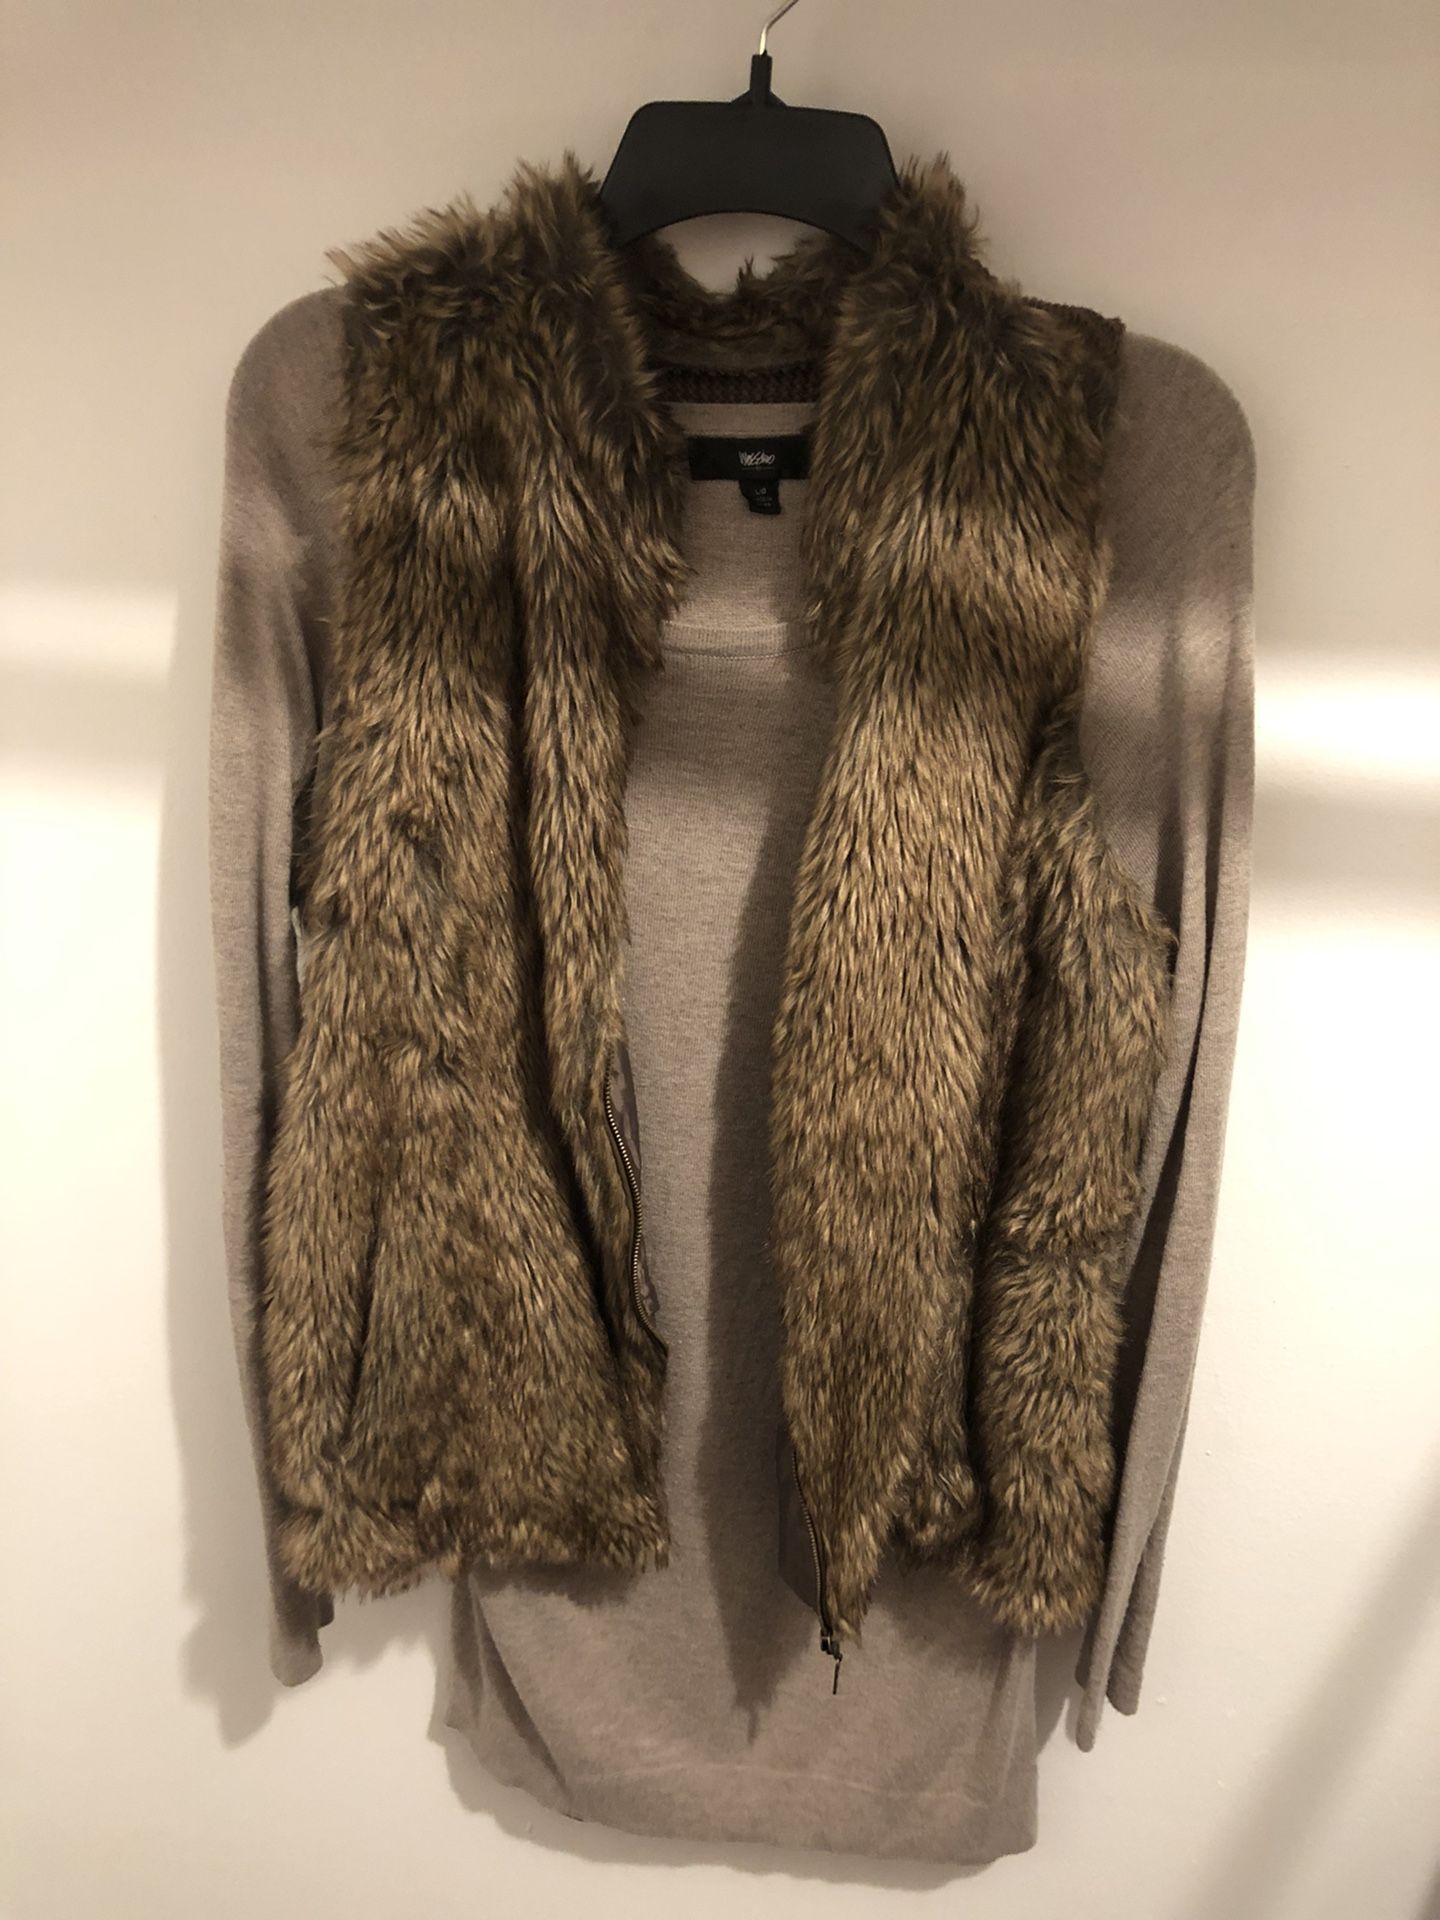 Fall/Winter | 2 pc vest + long sleeve top Bundle! Size L